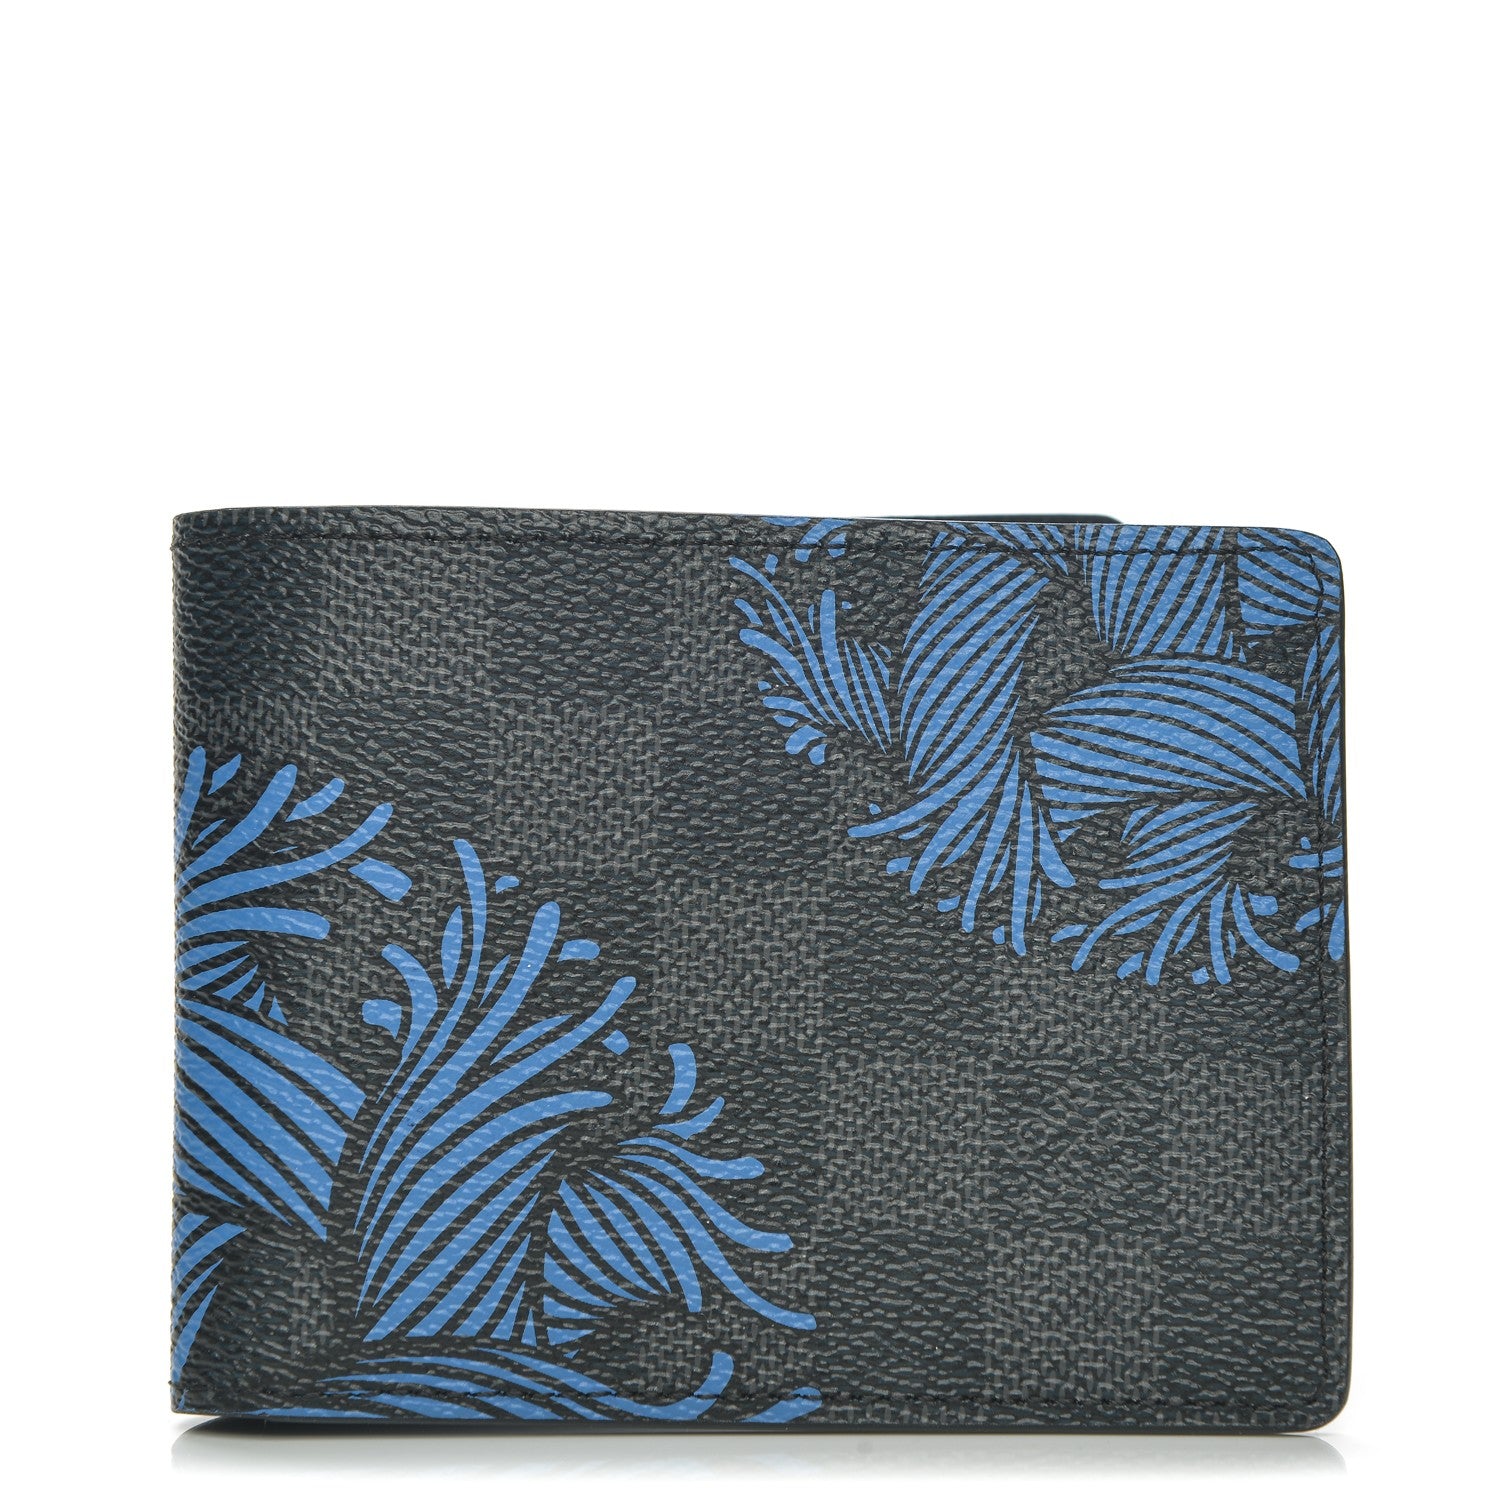 Louis Vuitton Damier Graphite Blue Rope Slender Wallet